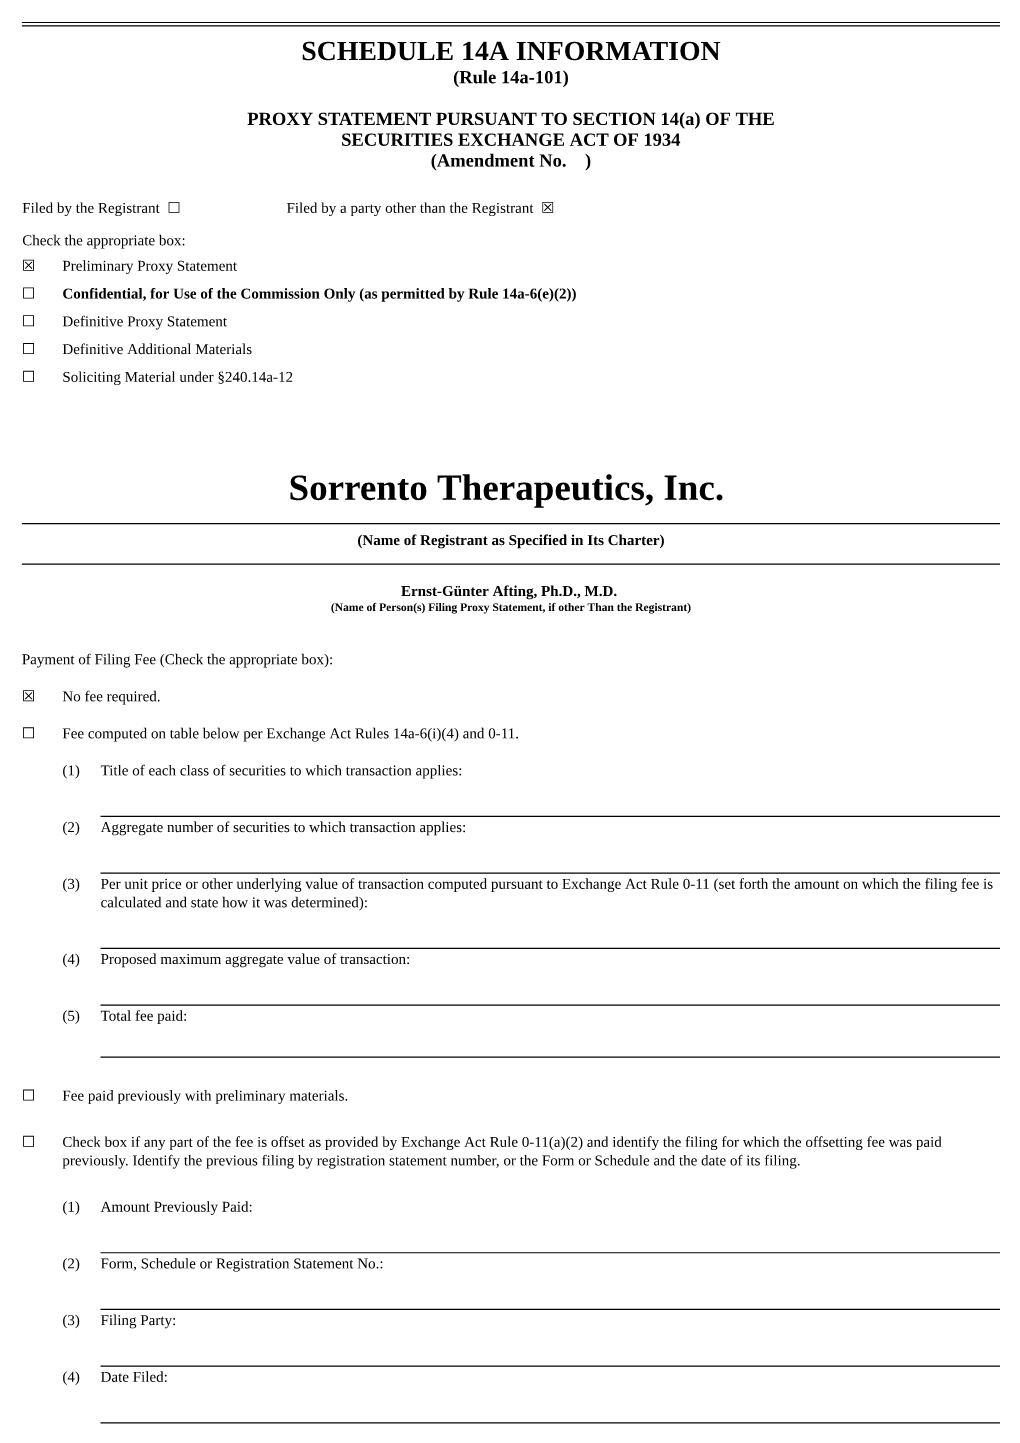 Sorrento Therapeutics, Inc